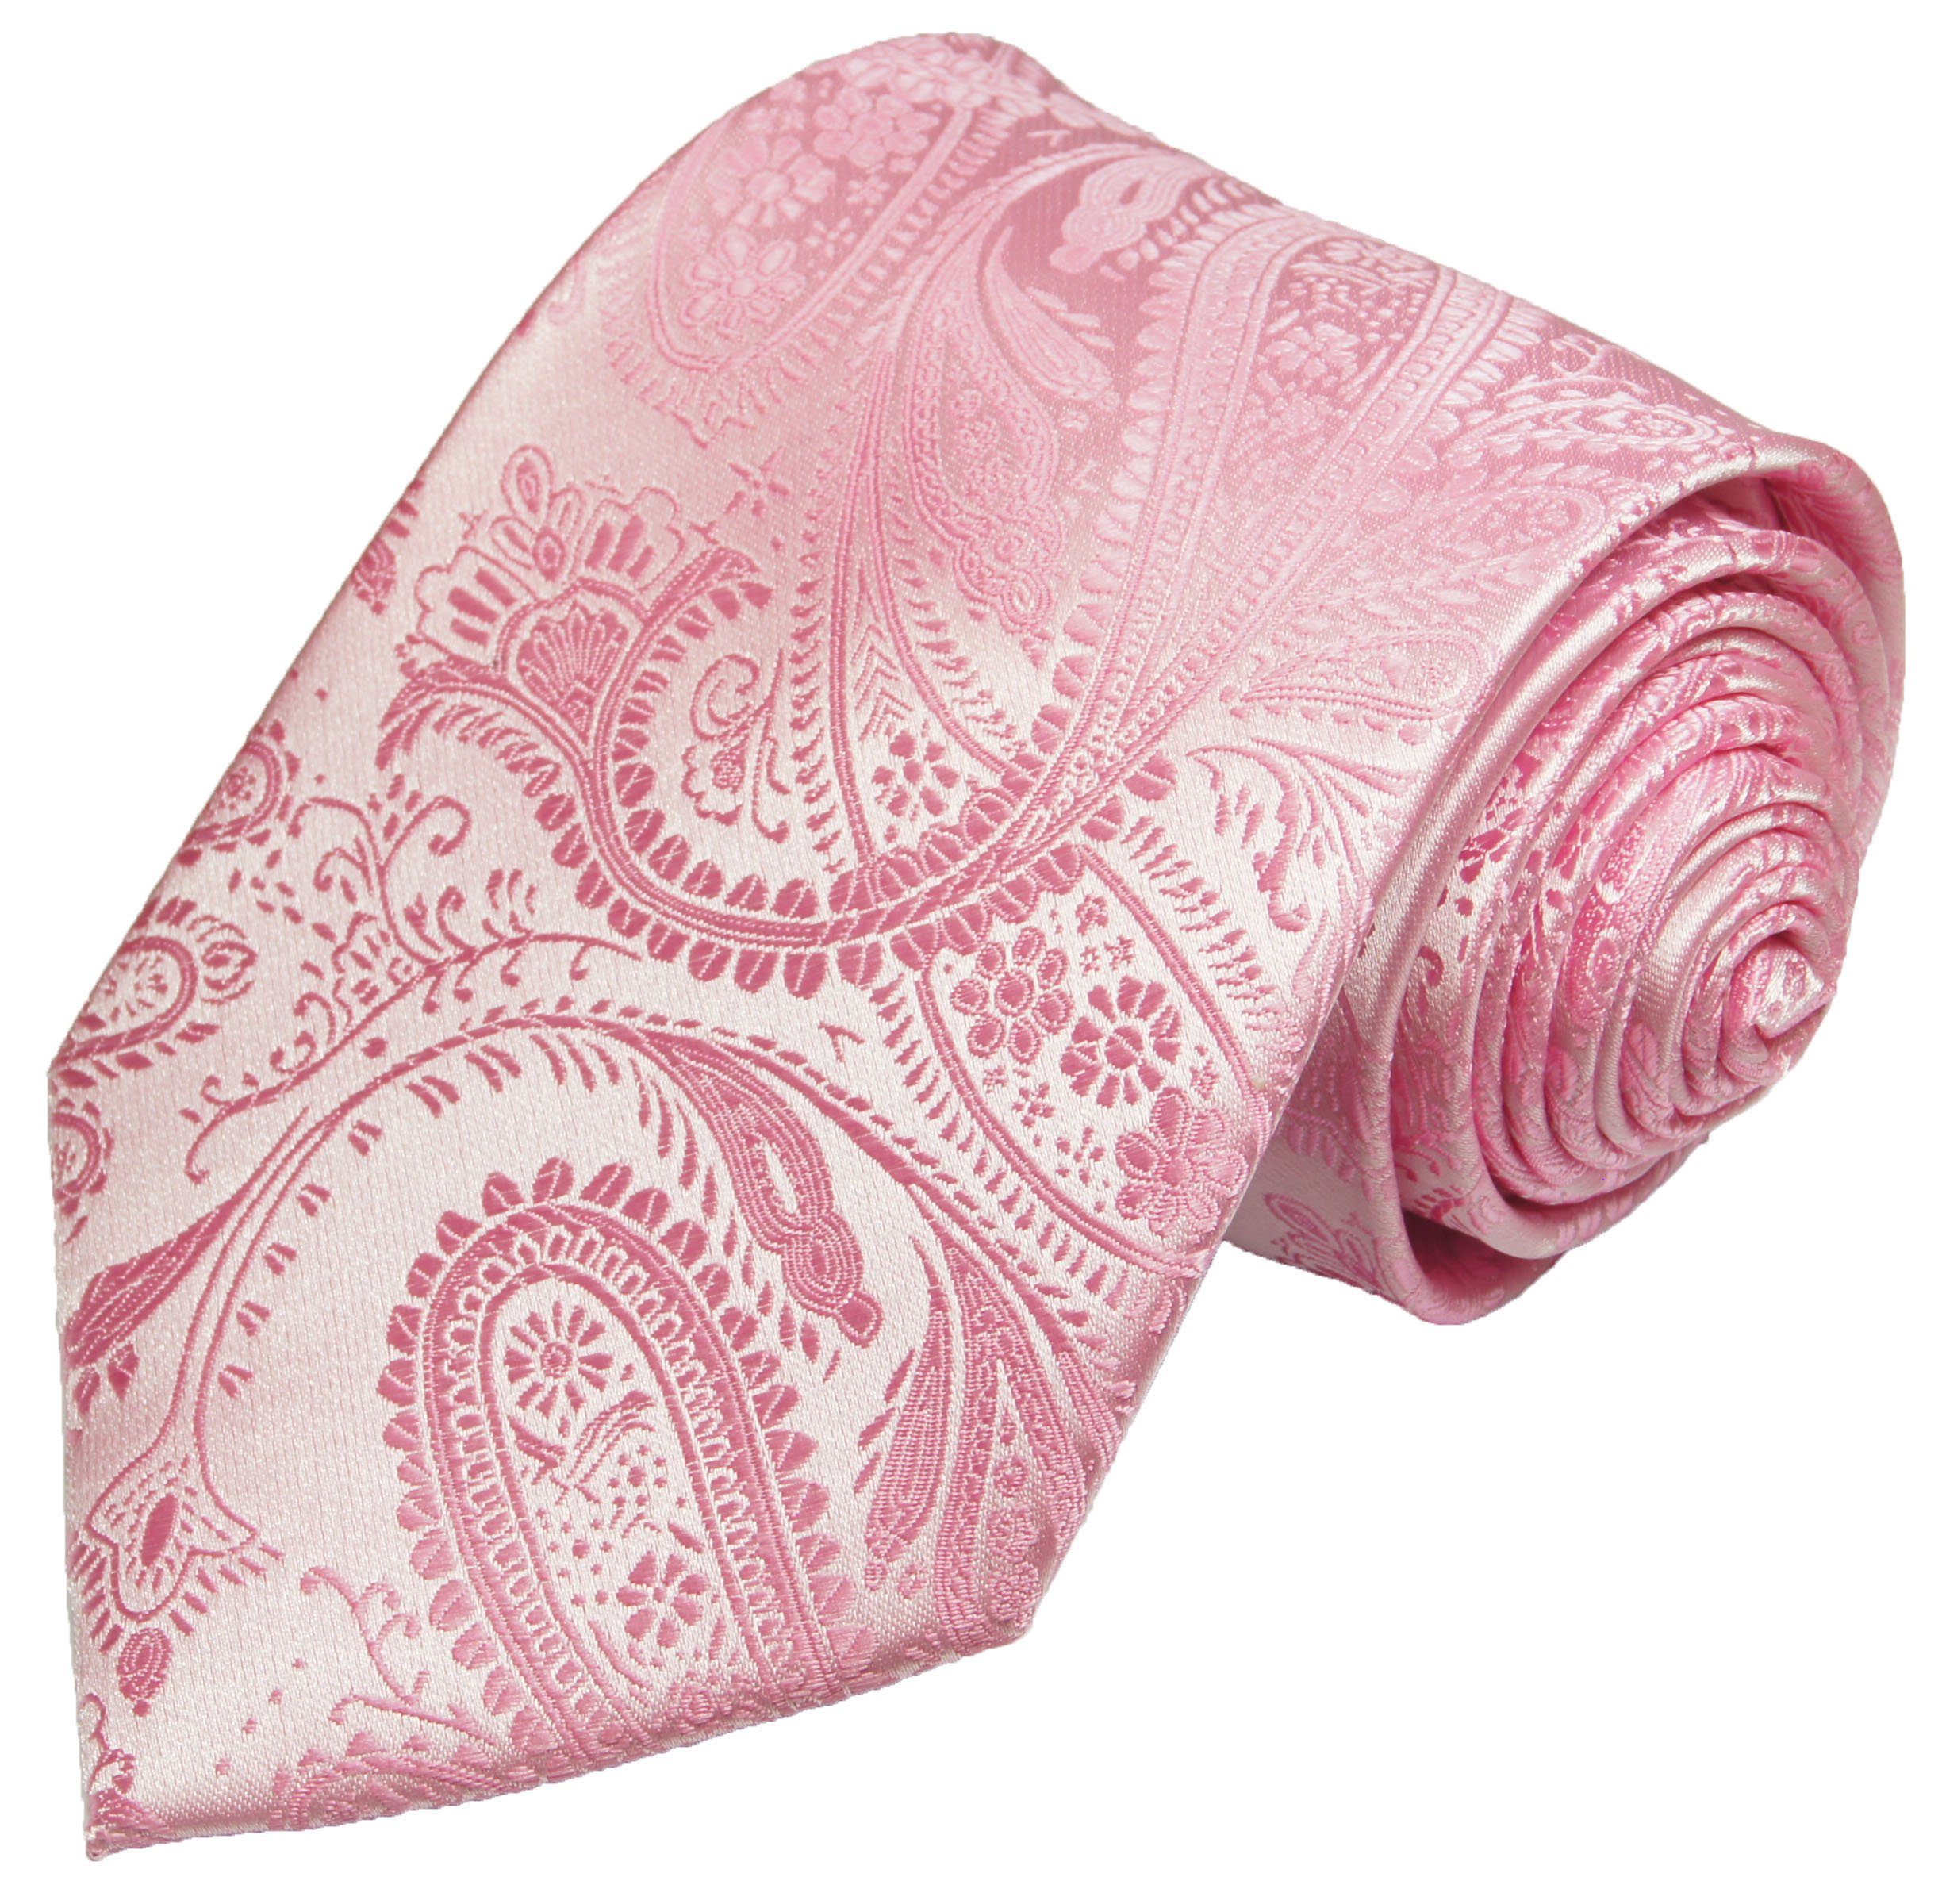 Paul Malone Krawatte Herren Hochzeitskrawatte paisley - Mikrofaser - Bräutigam Breit (8cm), rosa pink V94